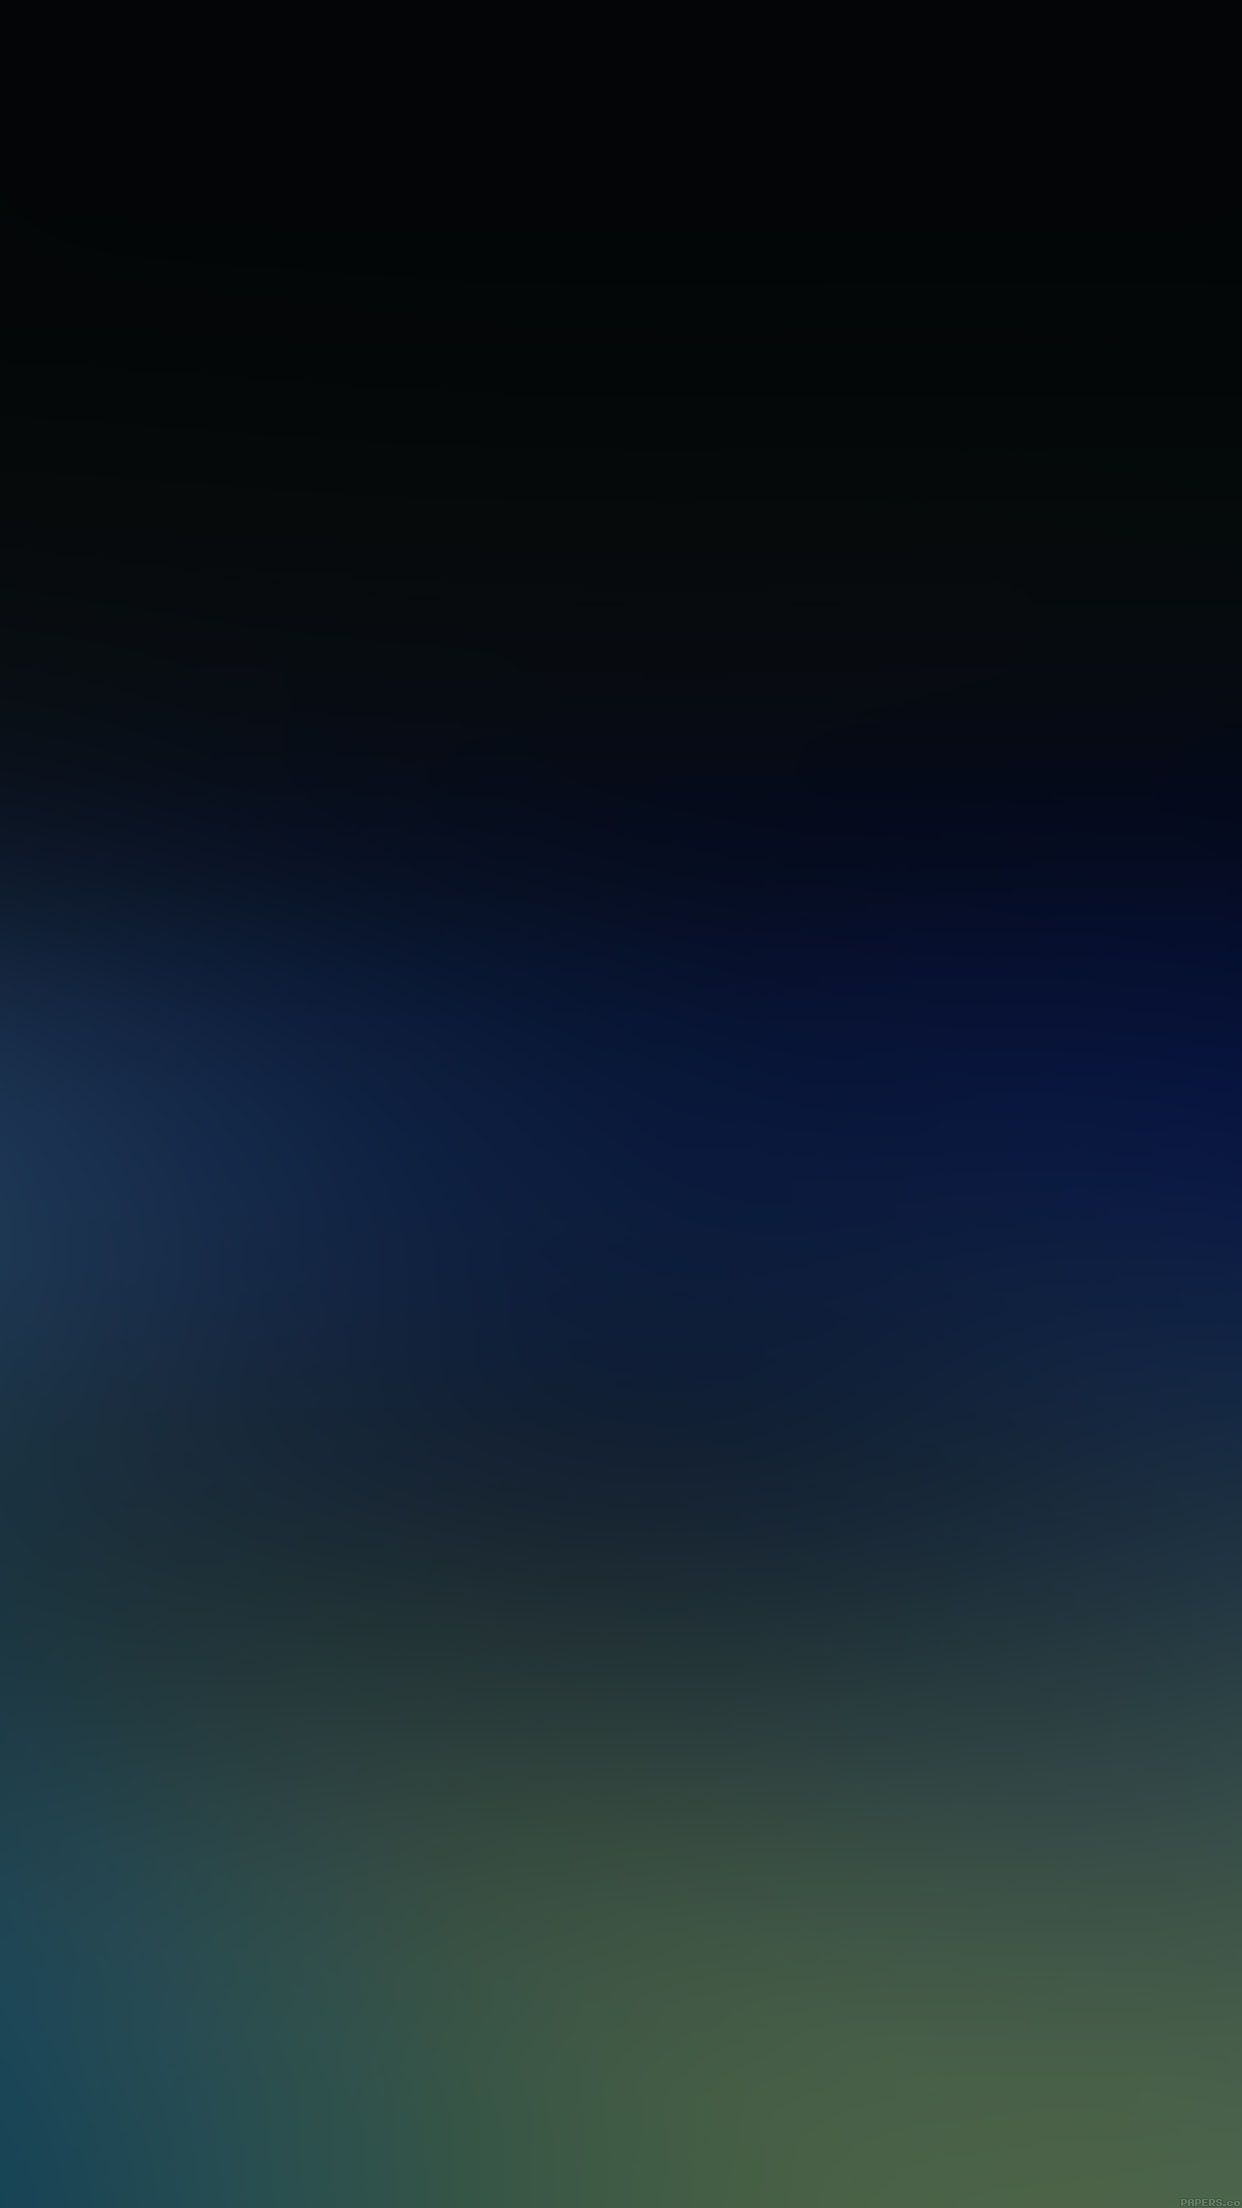 Iphone Black Blur Backgrounds